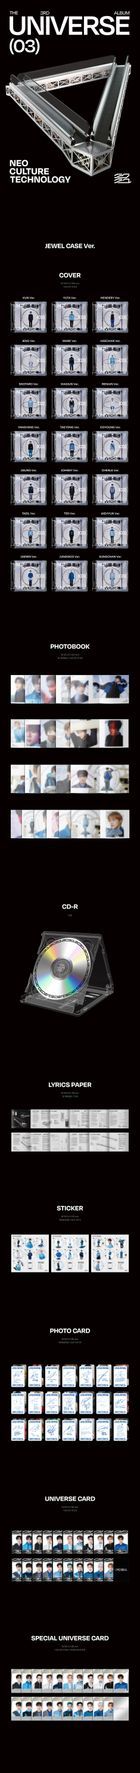 NCT Vol. 3 - Universe (Jewel Case Version) (Shotaro Version)